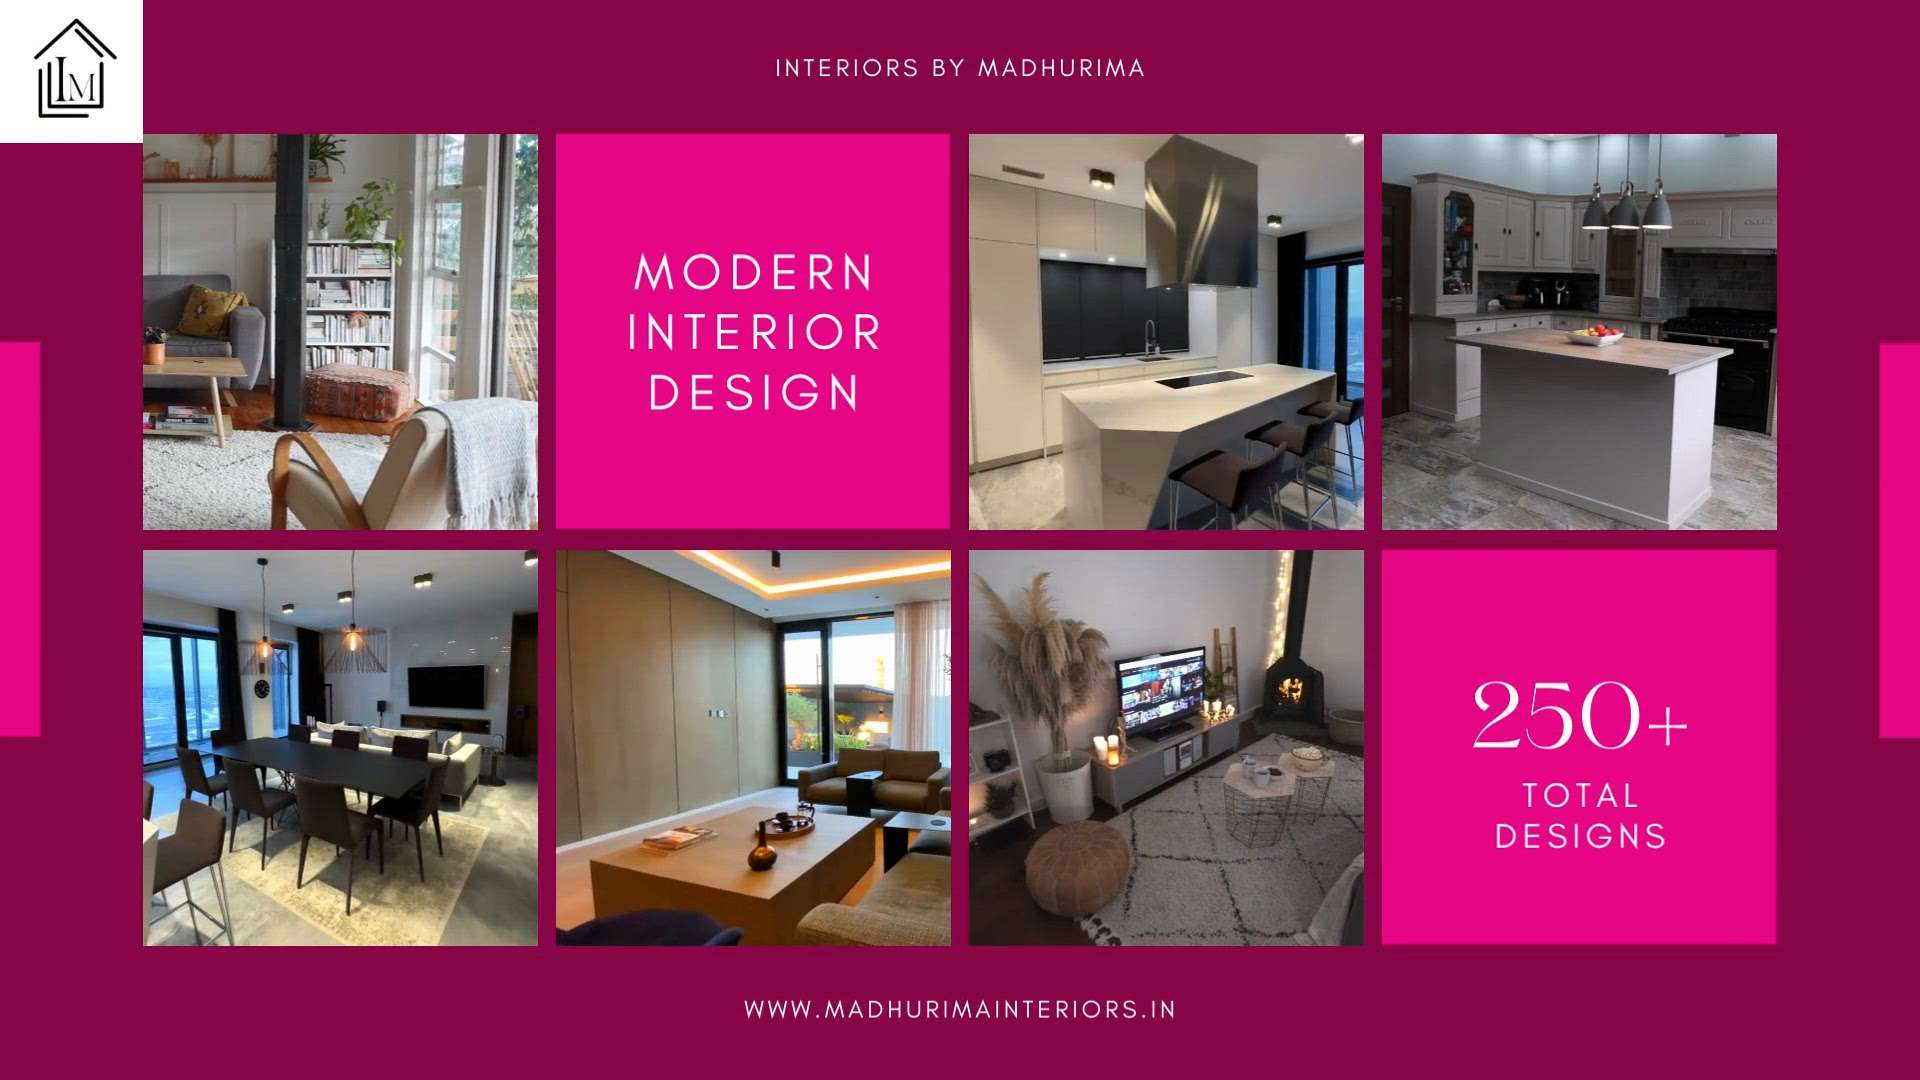 #IMInteriors
#InteriorsbyMadhurima
#Modernhome
#KitchenInteriors
#Homestyle
#HomeDecor